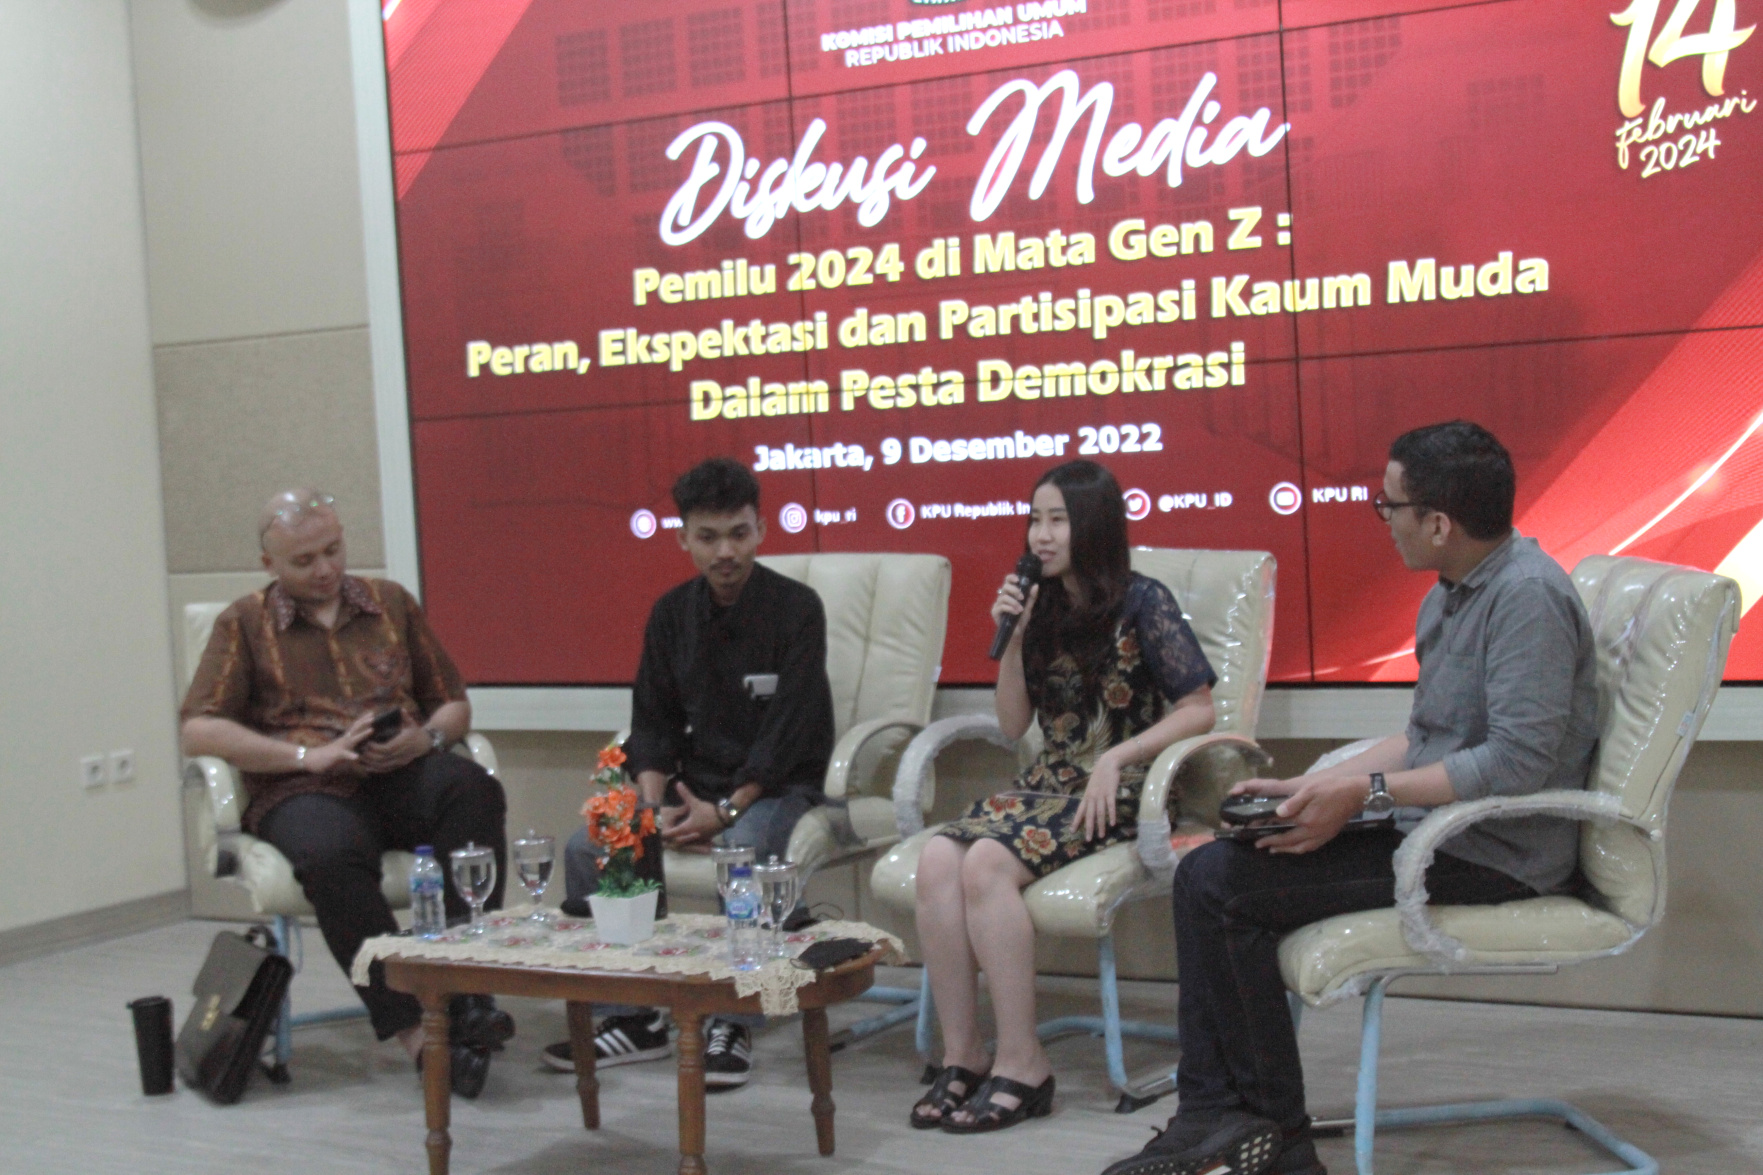 KPU gelar diskusi media dengan tema Pemilu 2024 di Mata Gen Z, peran Ekspetasi dan Partisipasi Kaum Muda Dalam Pesta Demokrasi (Ashar/SinPo.id)